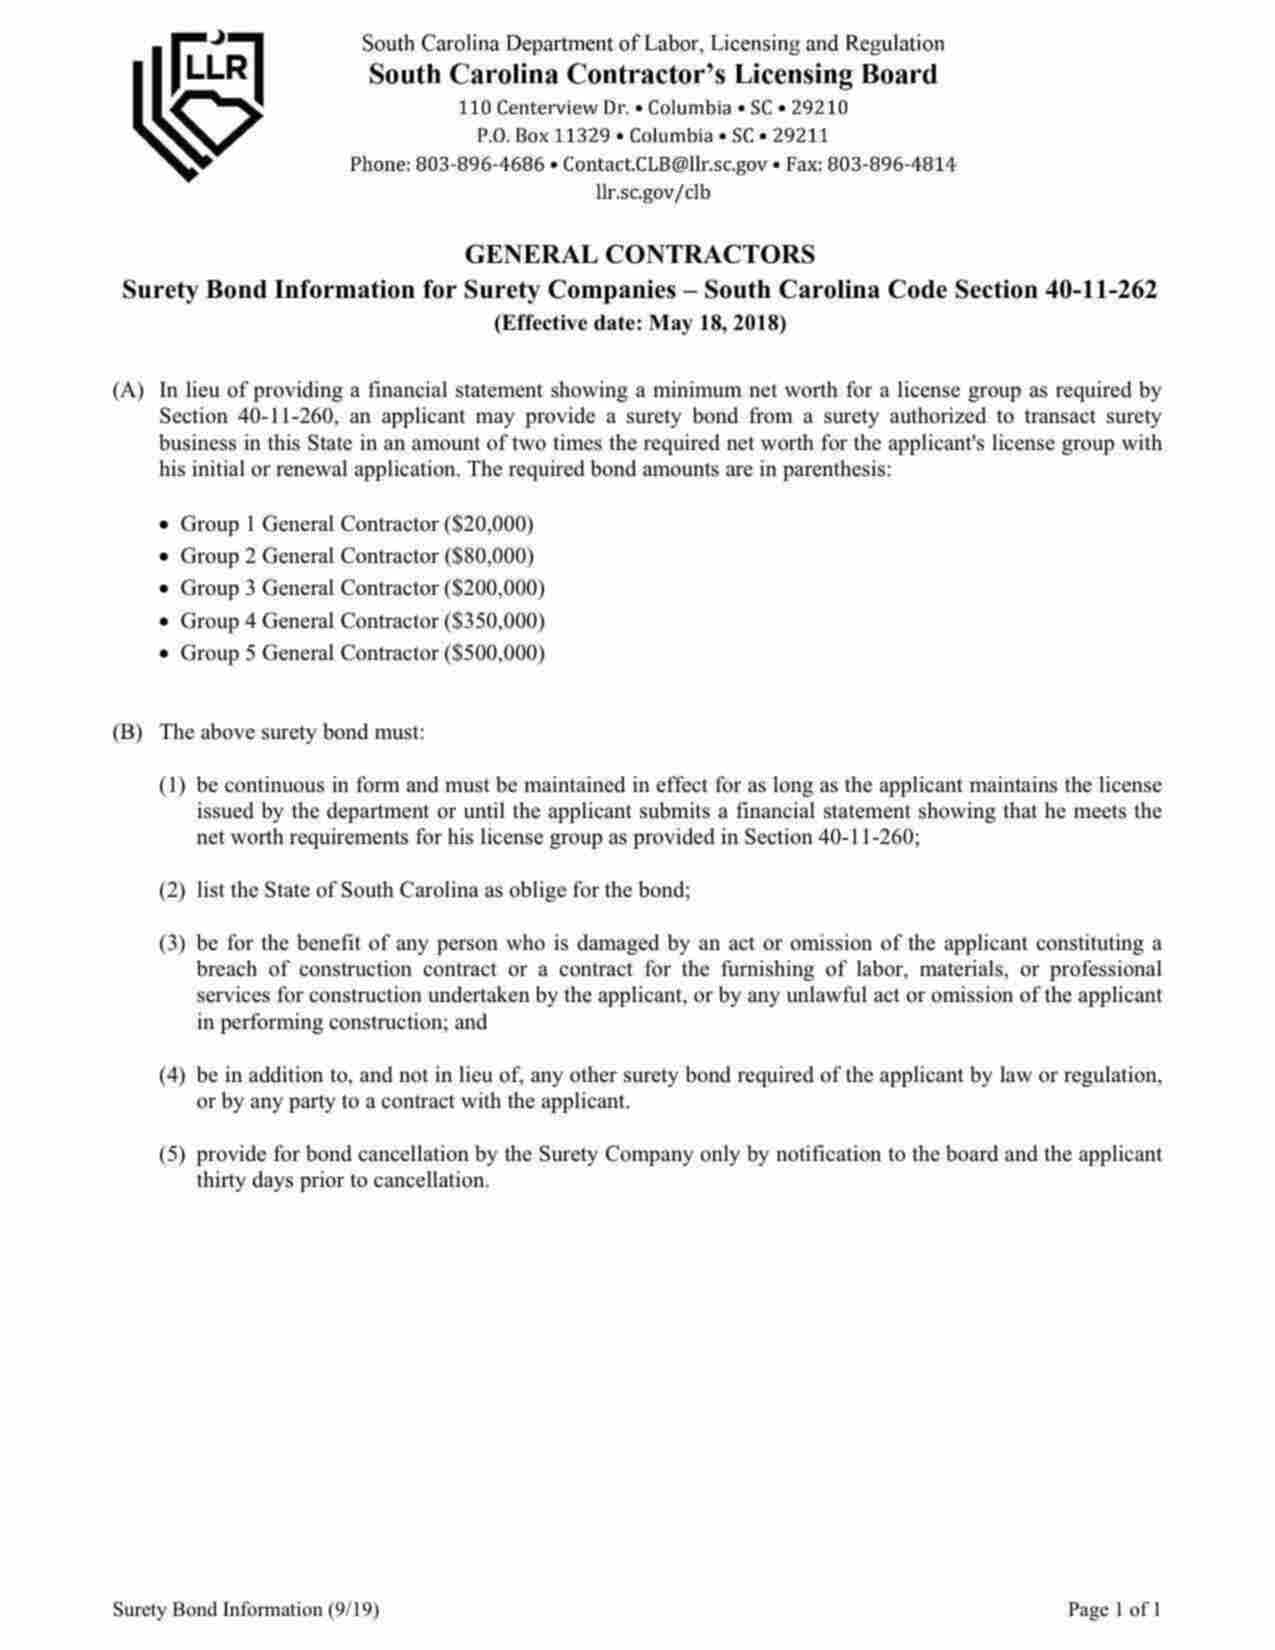 South Carolina General Contractor (Group 4) Bond Form